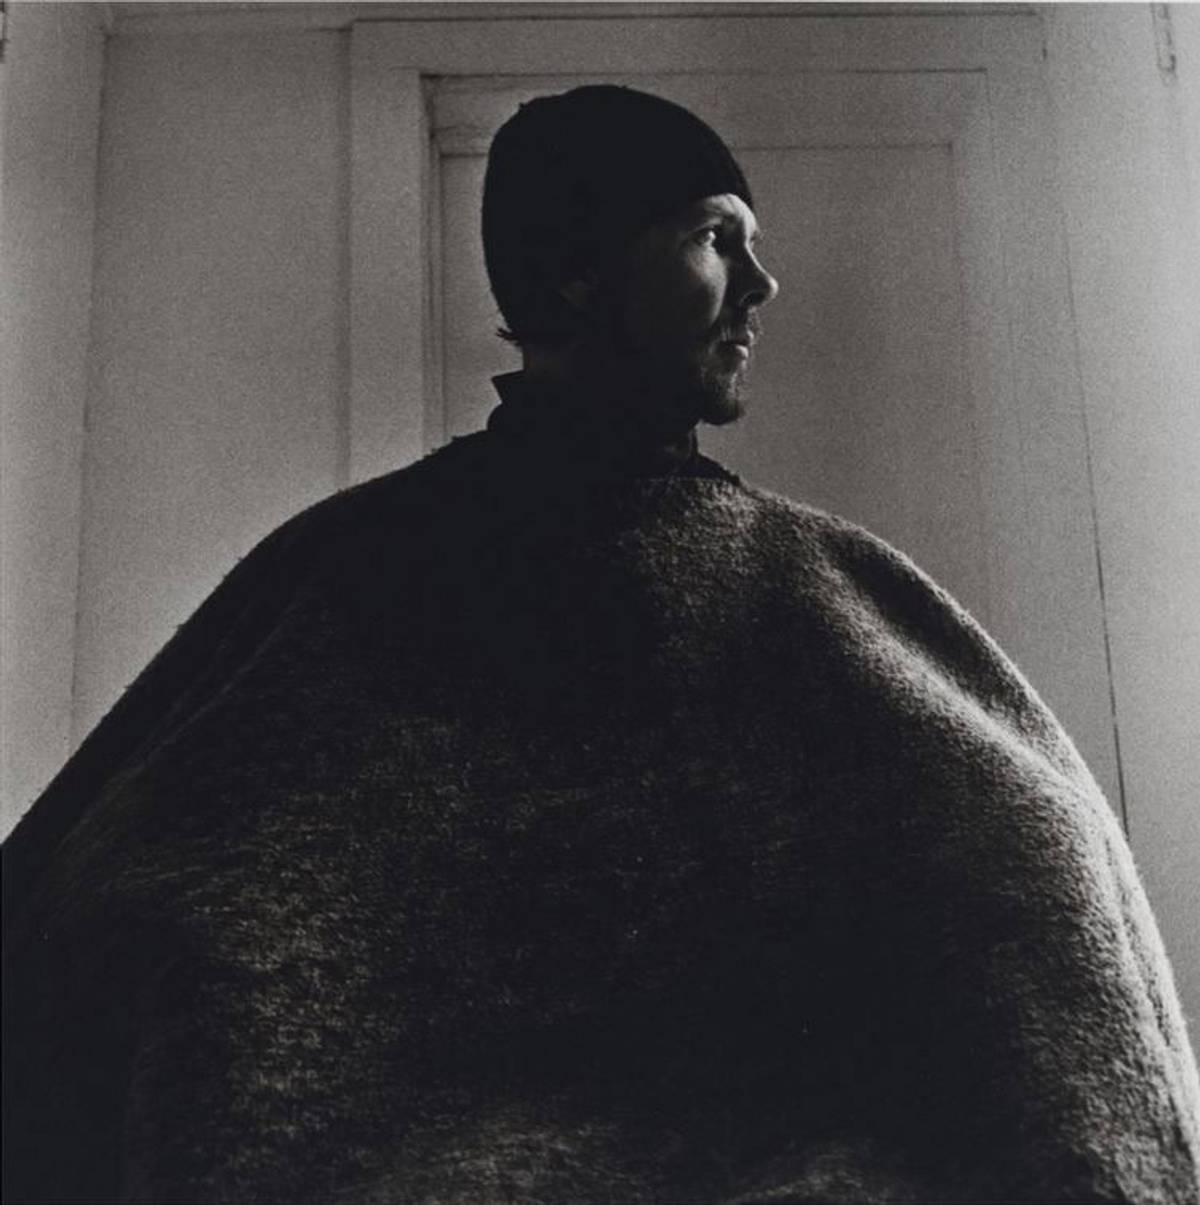 Robert Giard, Self-Portrait after Nadar’s George Sand, 1977. 